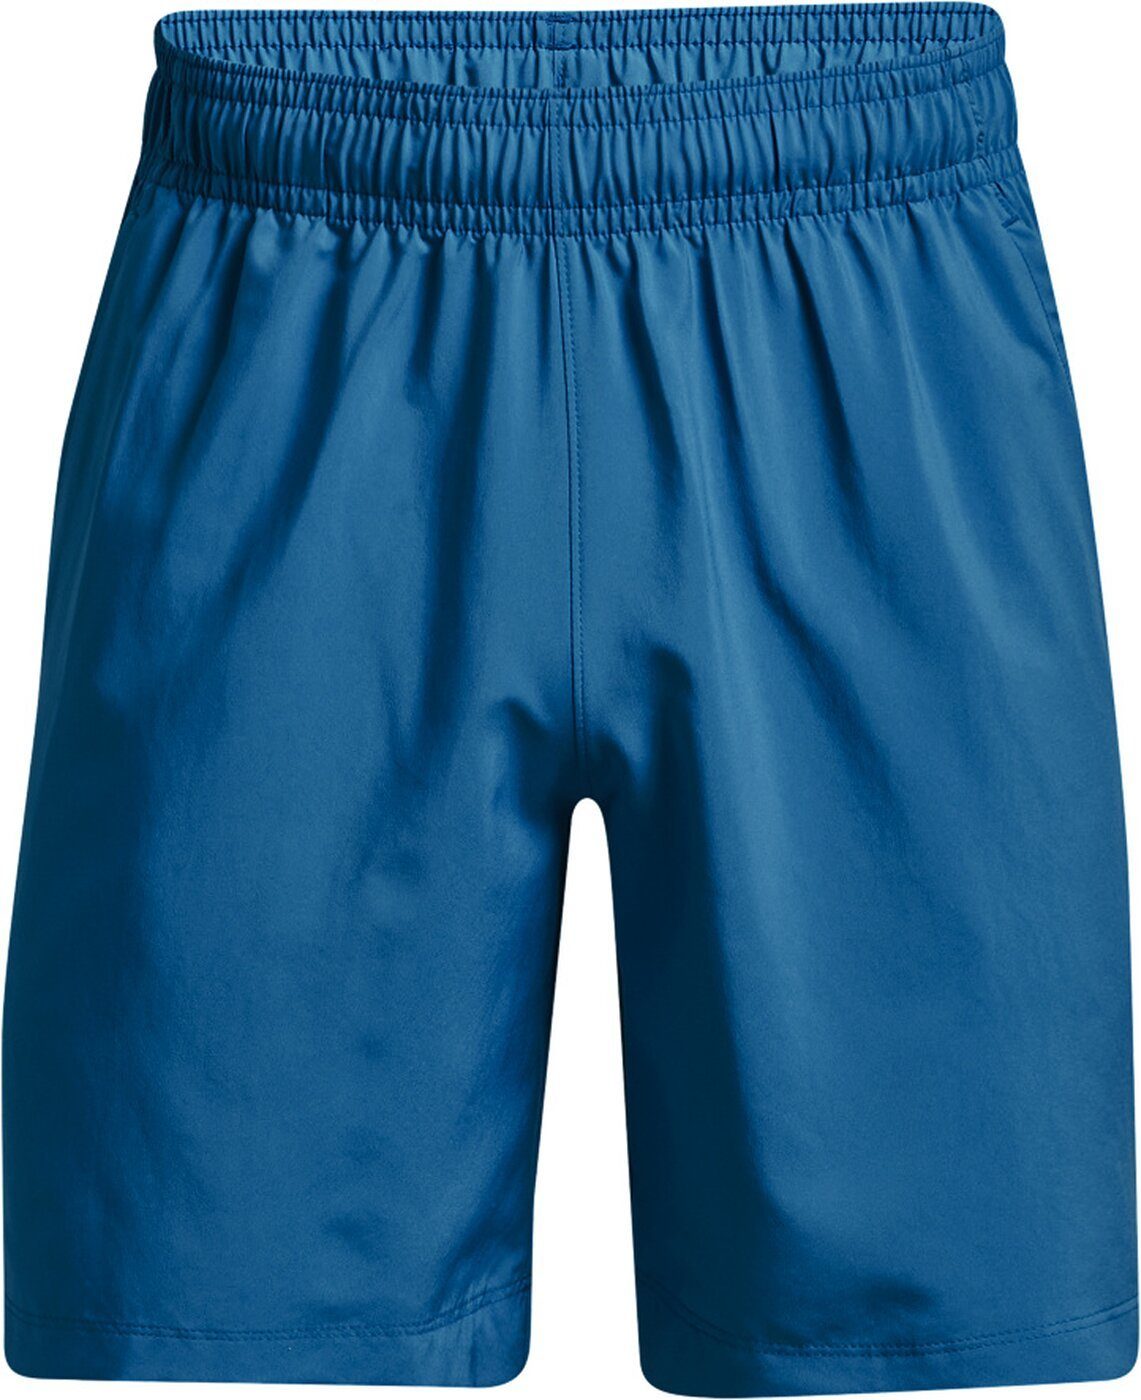 CRUISE 899 Shorts Under SHORTS Armour® GRAPHIC UA WOVEN BLUE 899